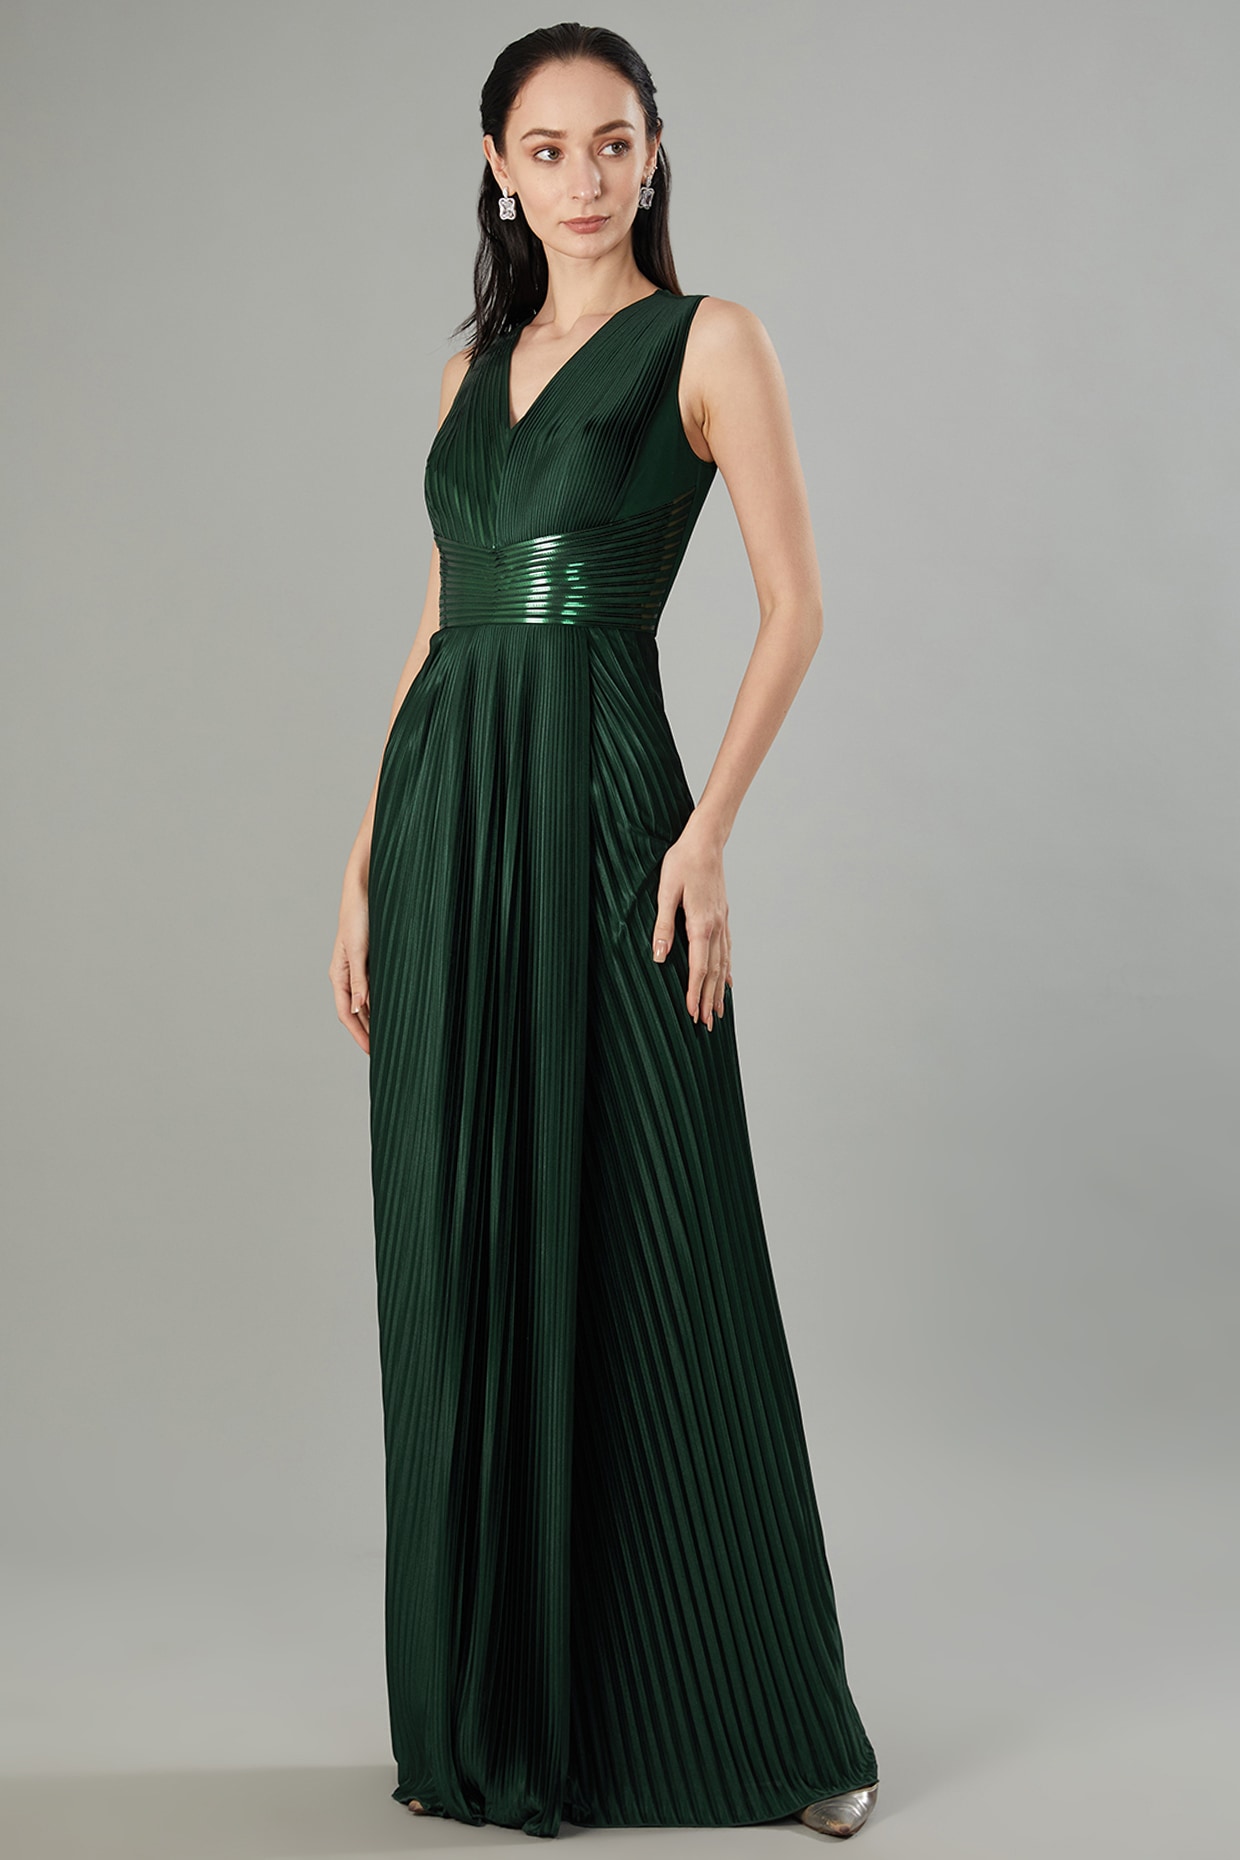 Mini Green Long Chiffon Evening Dress Sweetheart Beading off-Shoulder Formal  Prom Dress in Stock